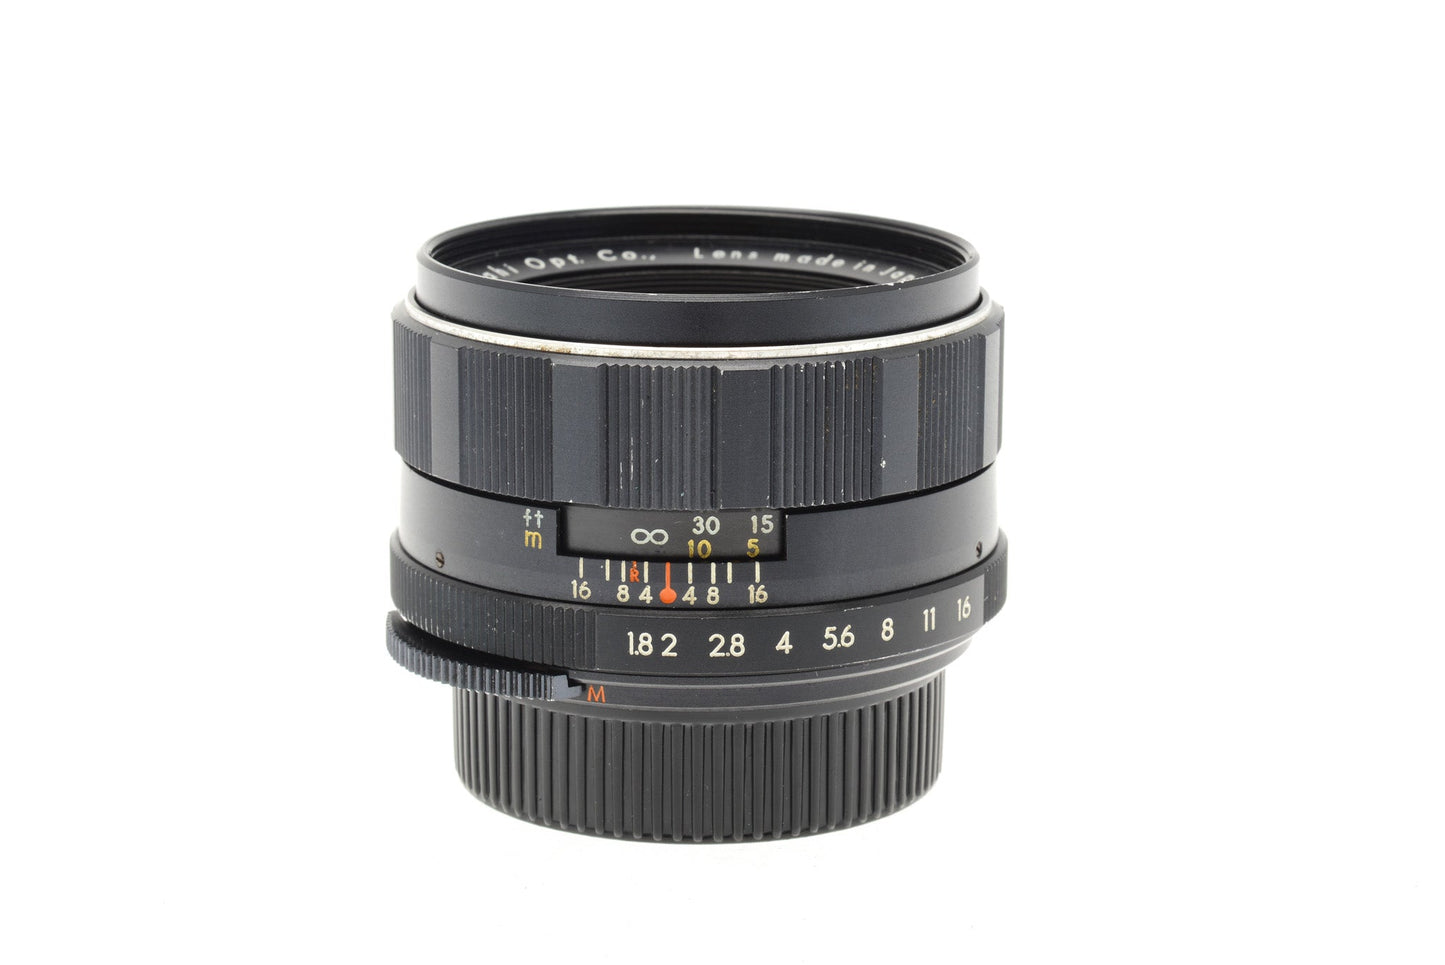 Pentax 55mm f1.8 Auto-Takumar - Lens